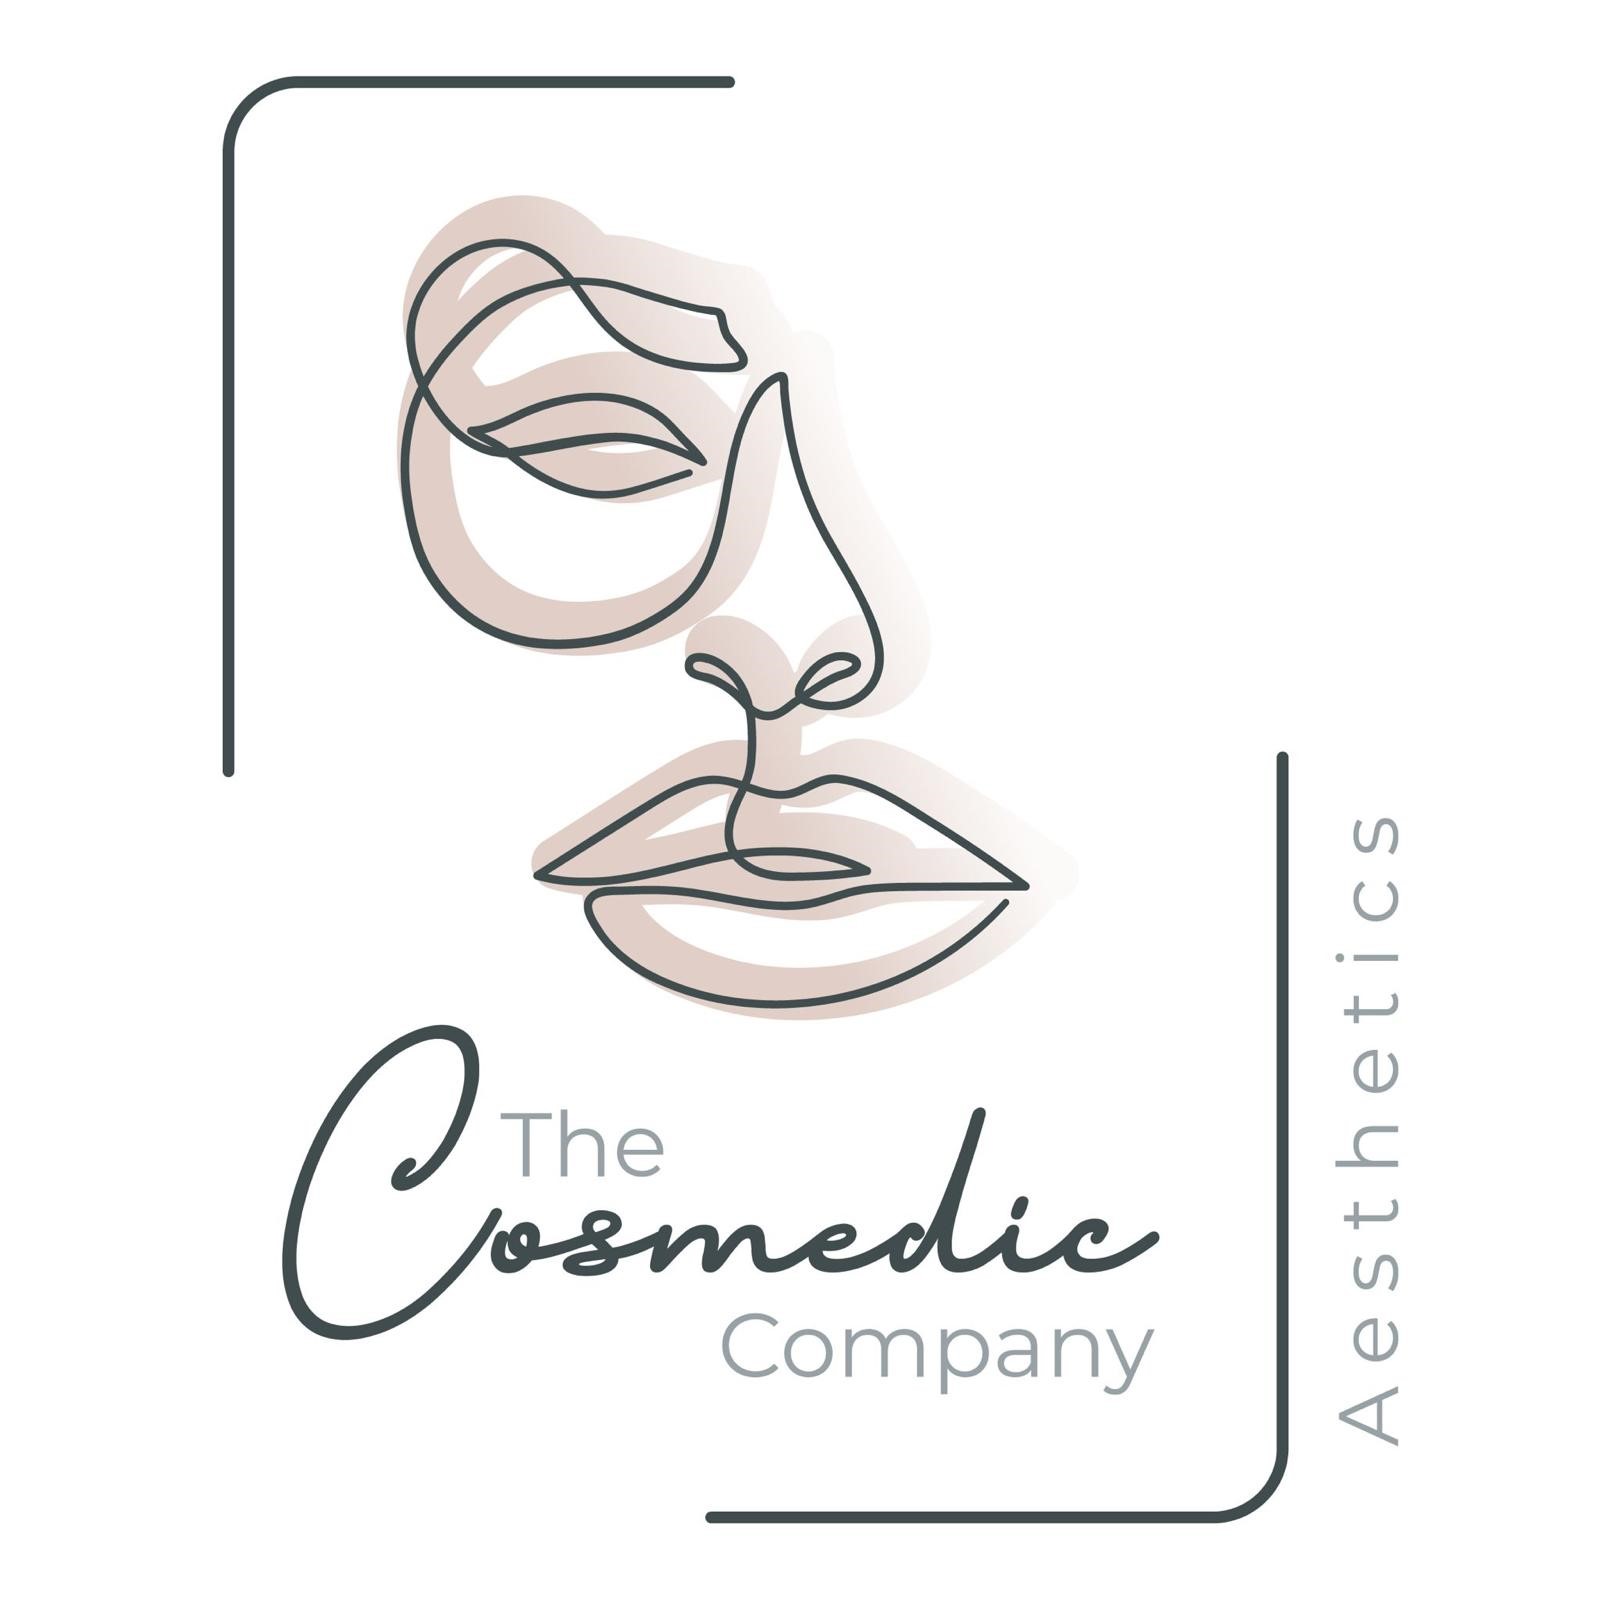 The Cosmedic Company